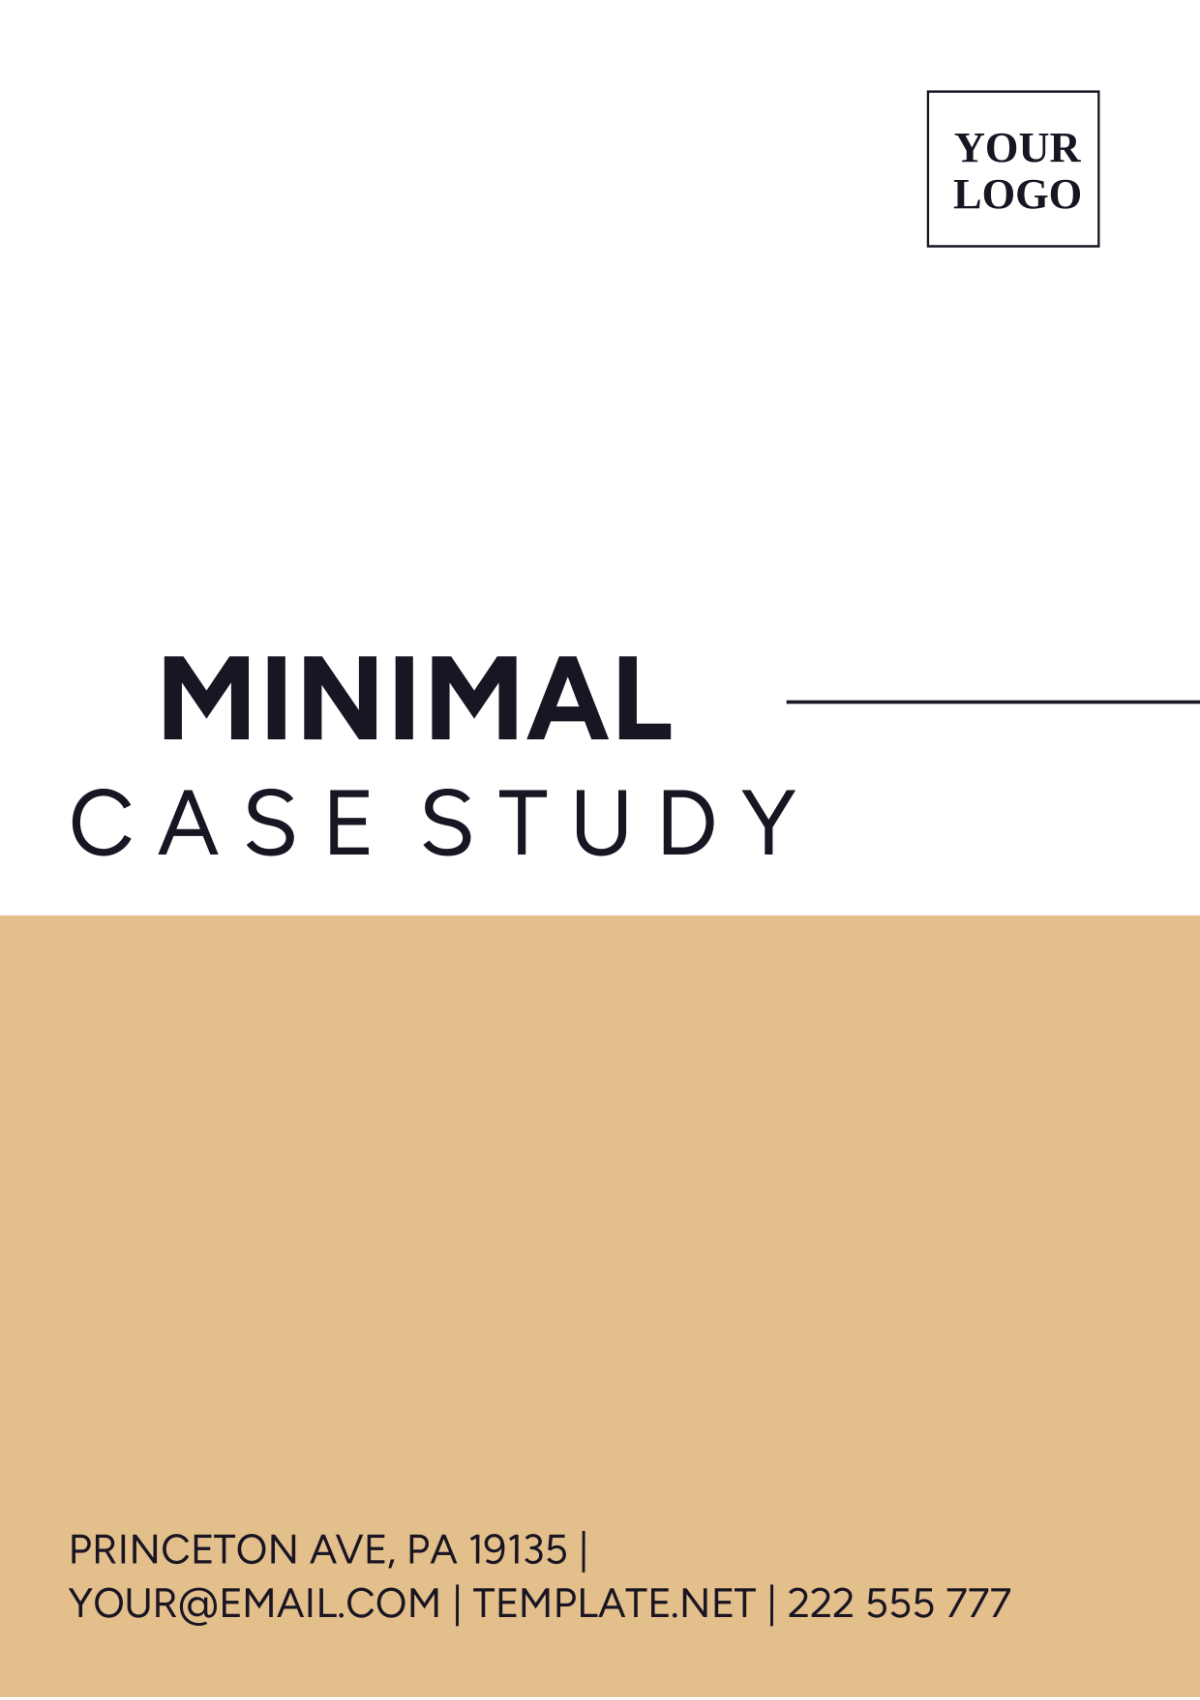 Free Minimal Case Study Template